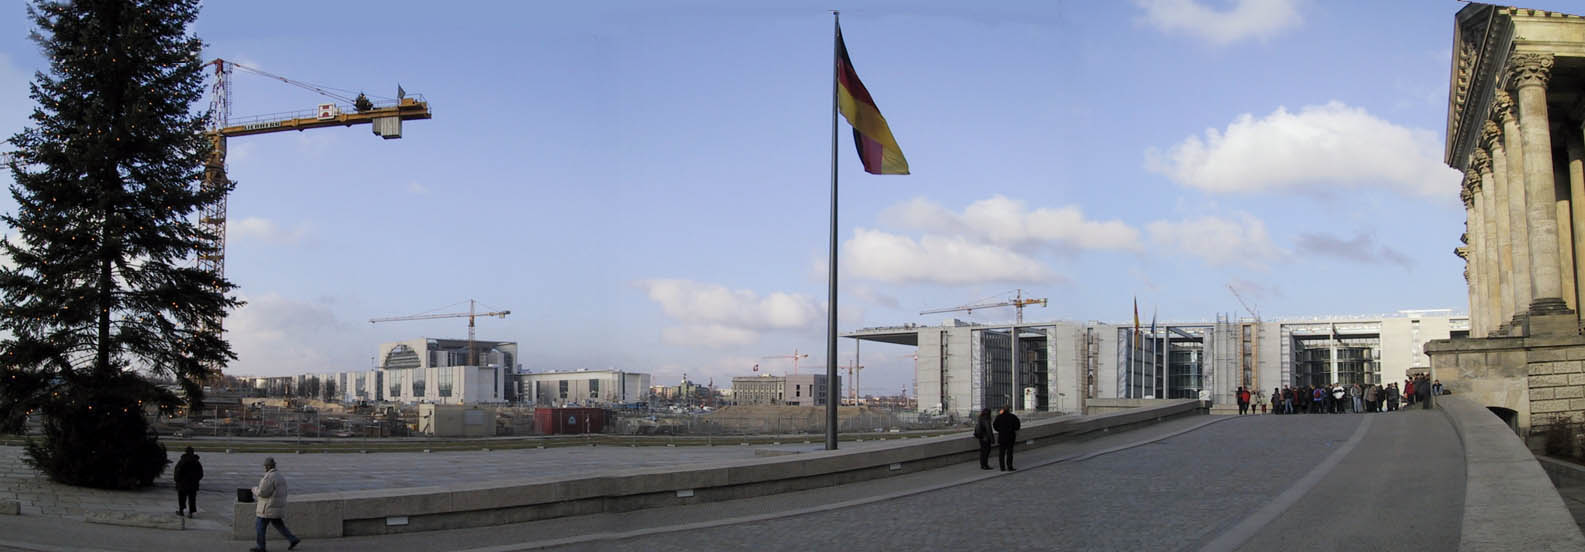 Reichstag Front